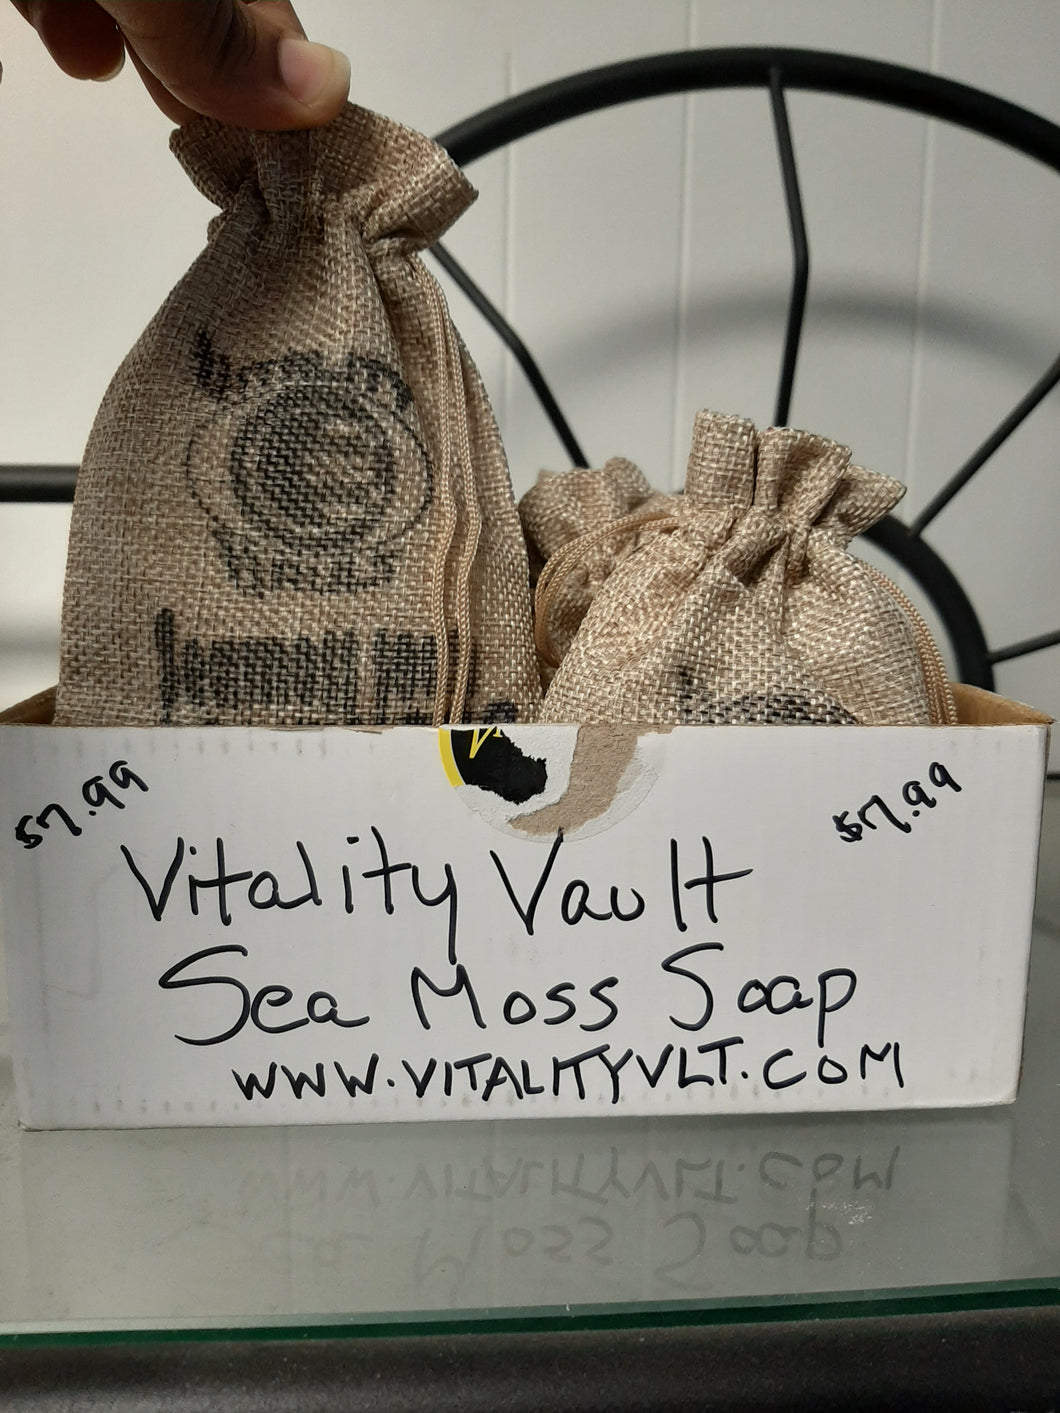 Sea Moss soap